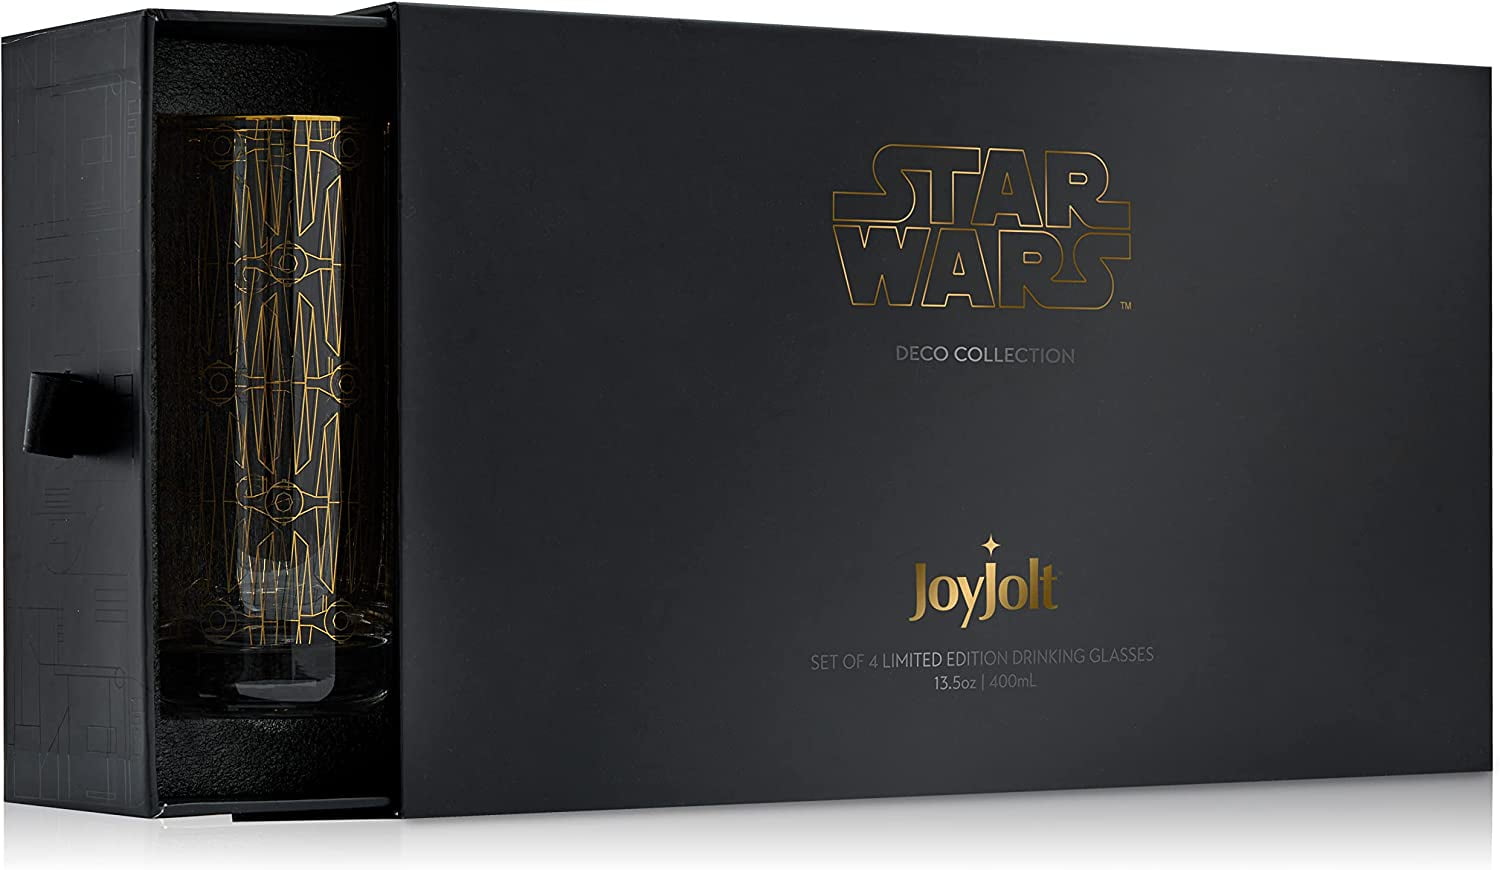 JoyJolt Star Wars TIE Fighter 10 oz. Clear Glass Double Wall Coffee Tea Mugs  (Set of 2) JSW10818 - The Home Depot